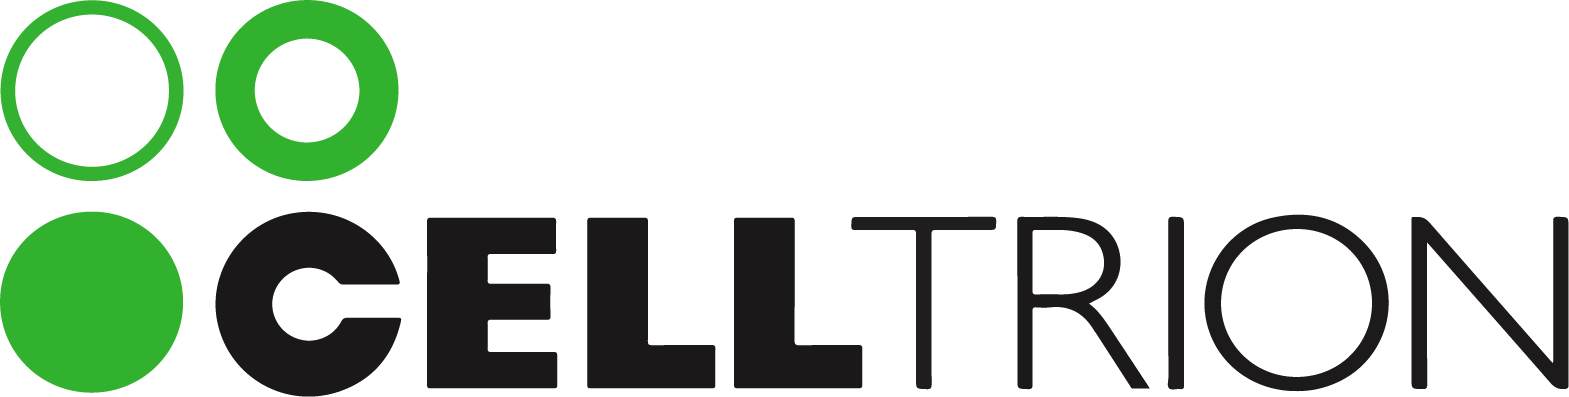 Celltrion Logo png